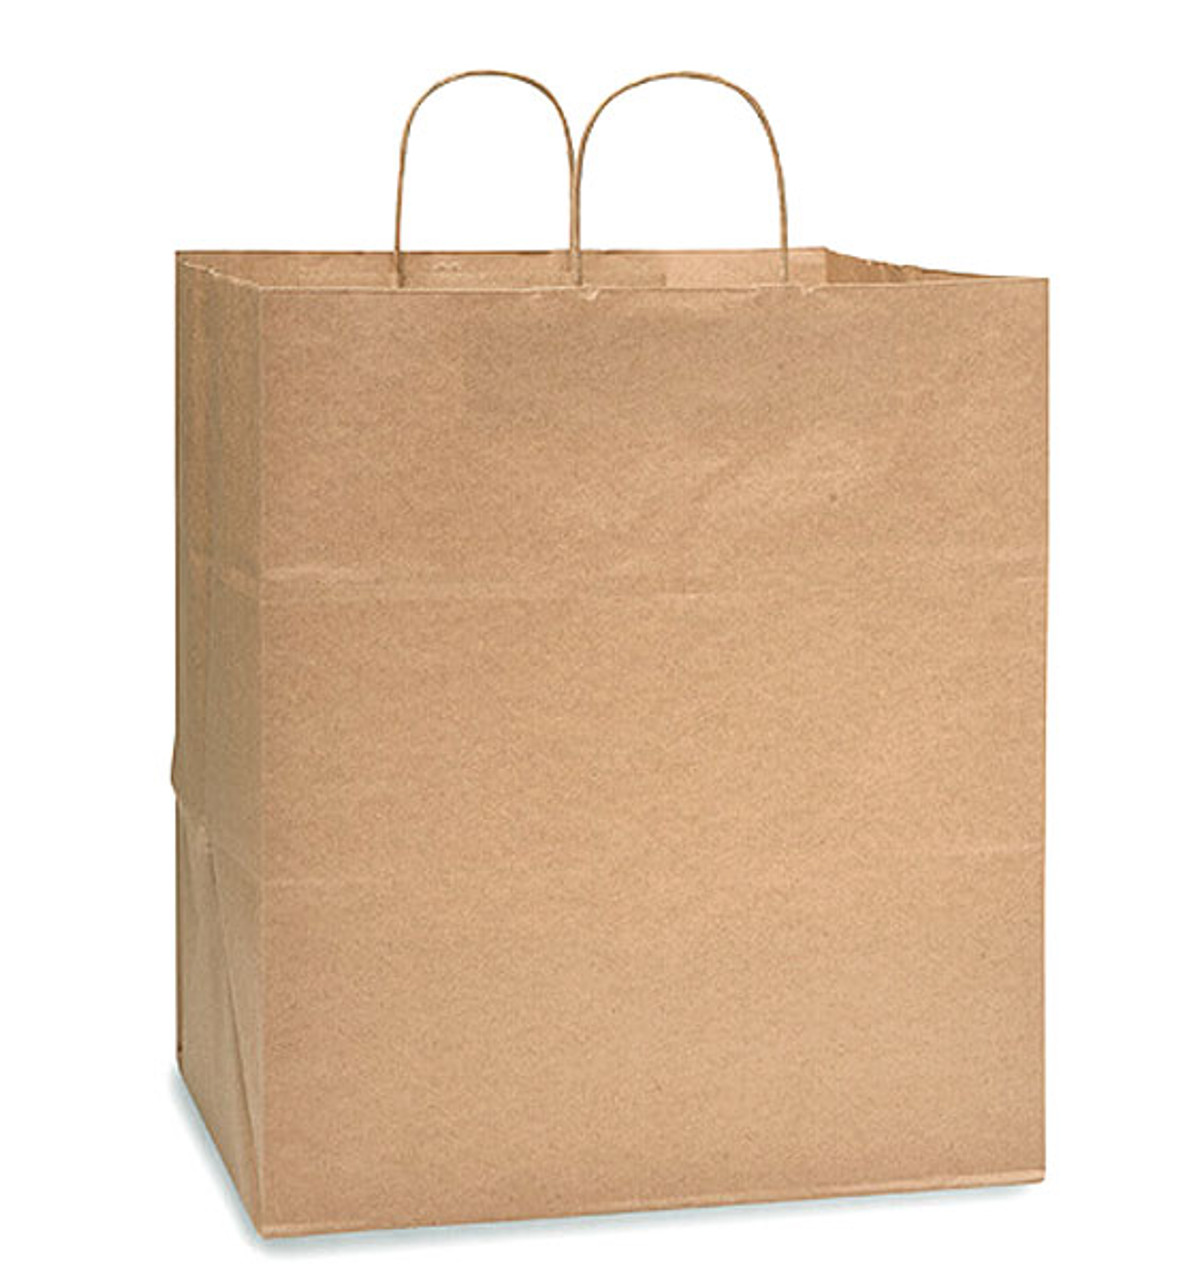 Lion 14"x 9-1/2 "x 15-1/2" 100% Recycled Kraft Paper Shopping Bags